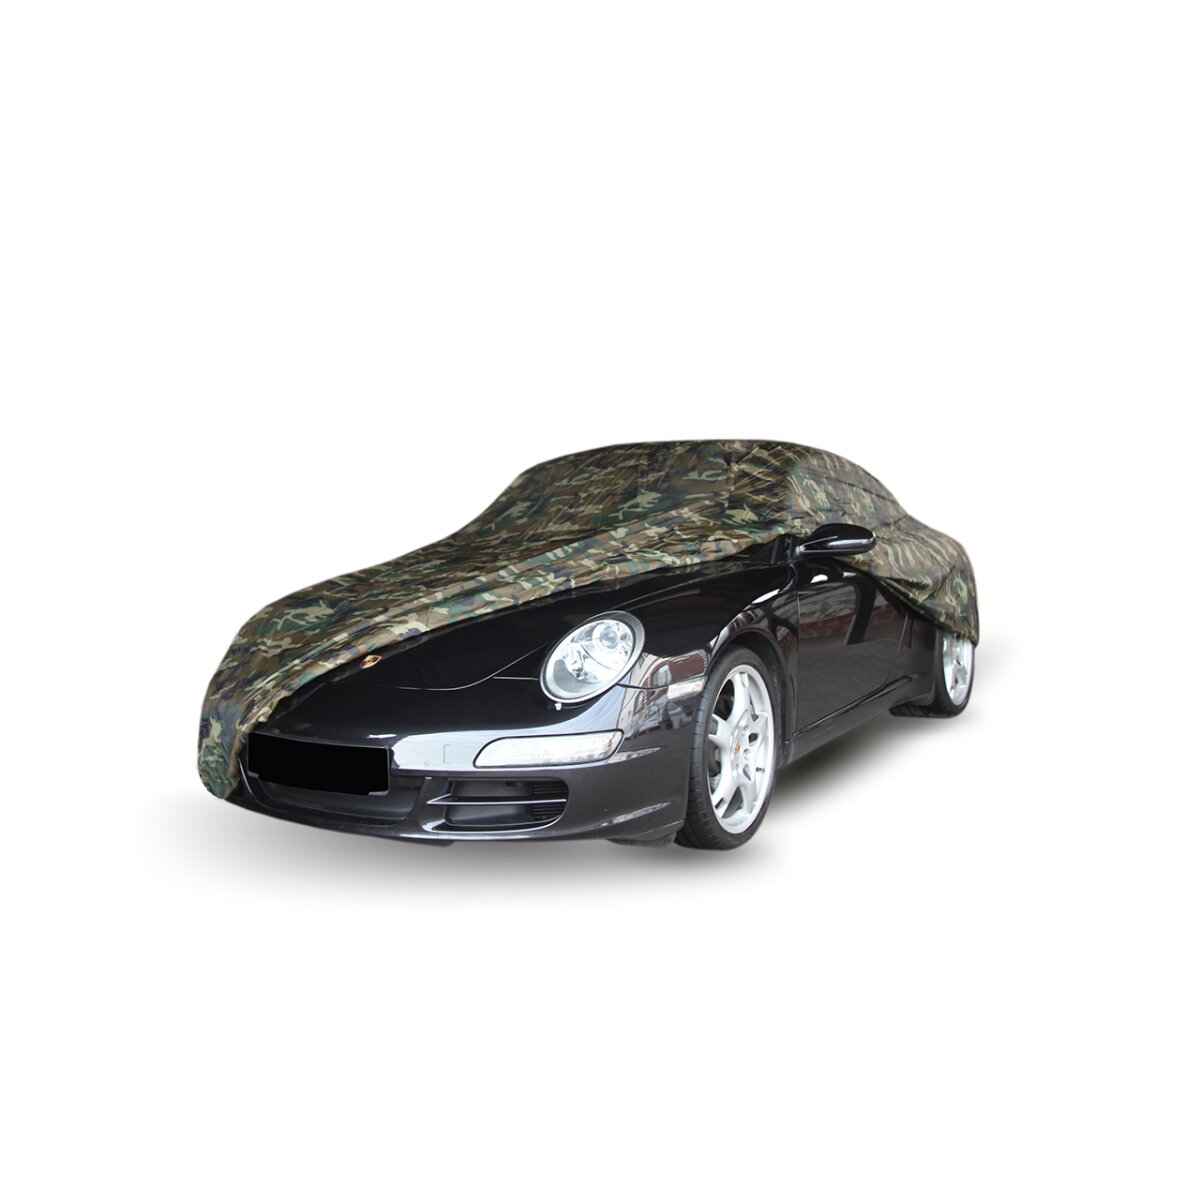 https://www.autoabdeckung.com/media/image/product/3998/lg/car-cover-autoabdeckung-camouflage-fuer-jaguar-f-type.jpg